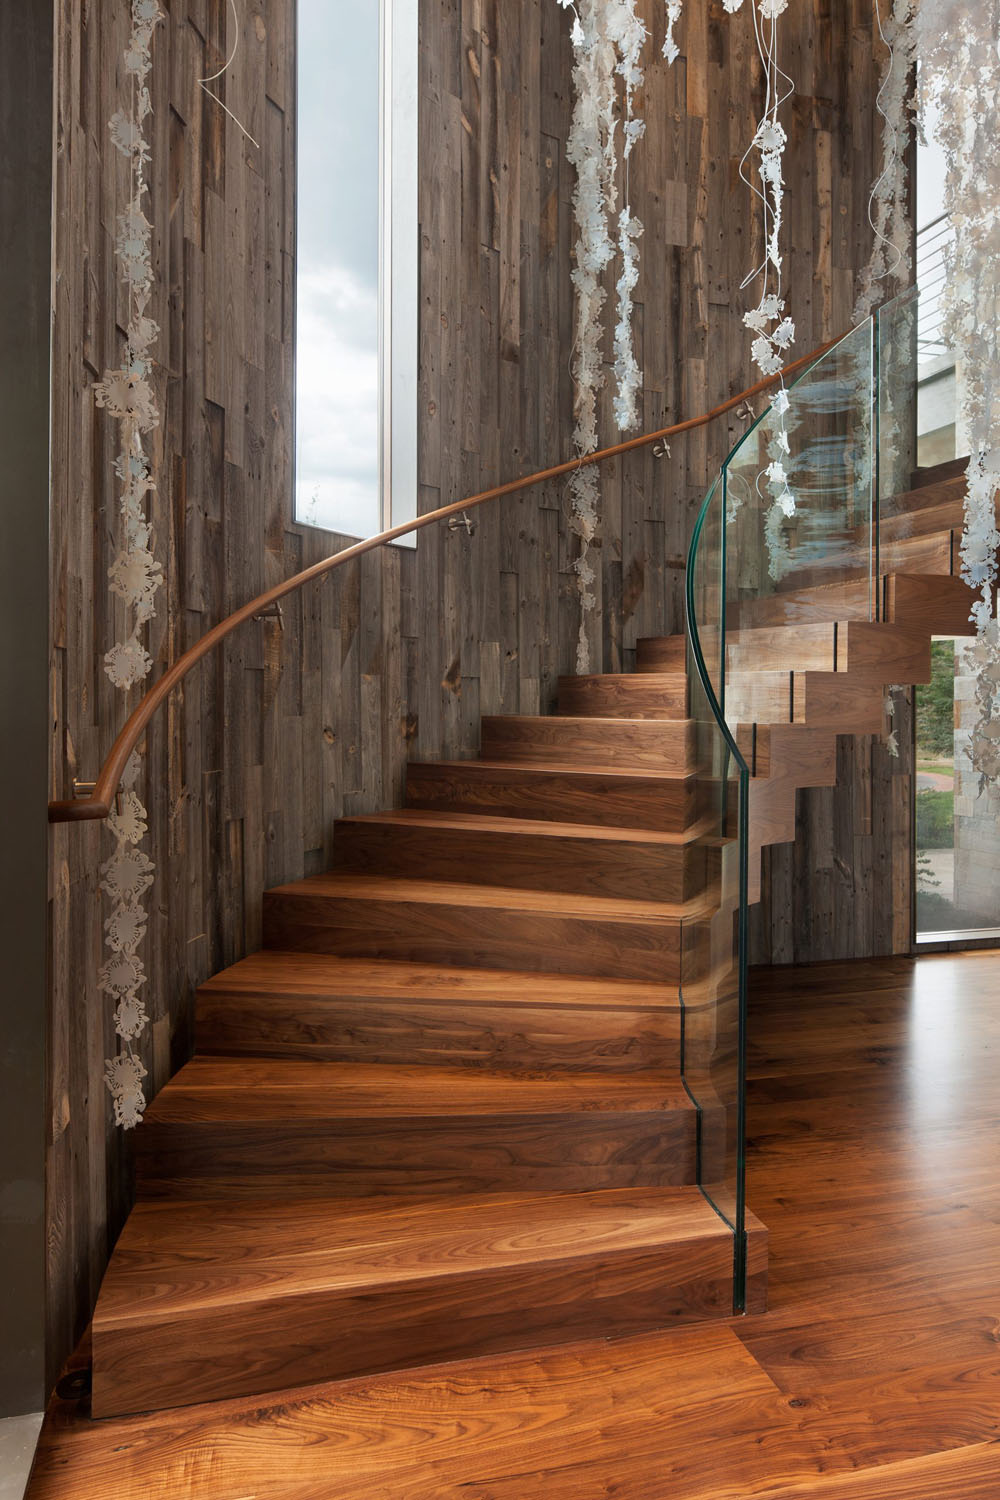 Circular Wood and Glass Staircase